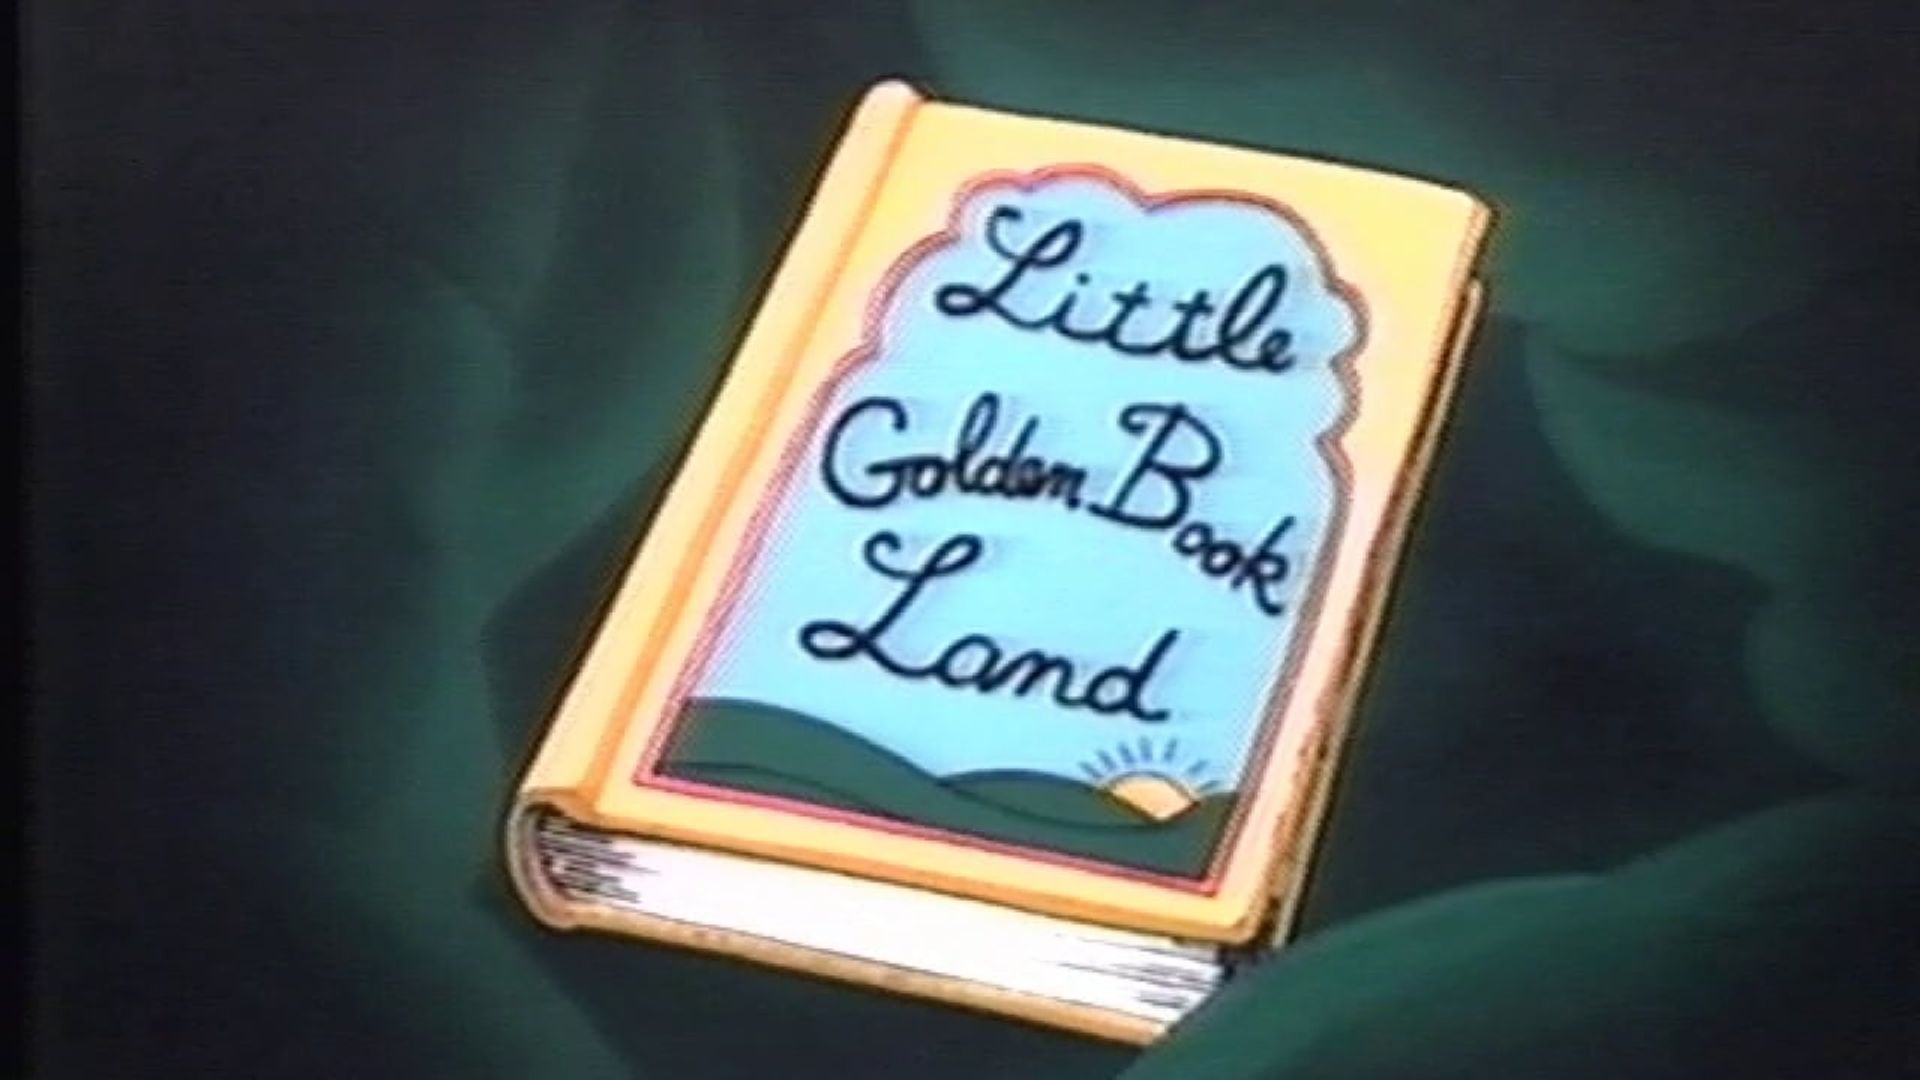 Little Golden Book Land background